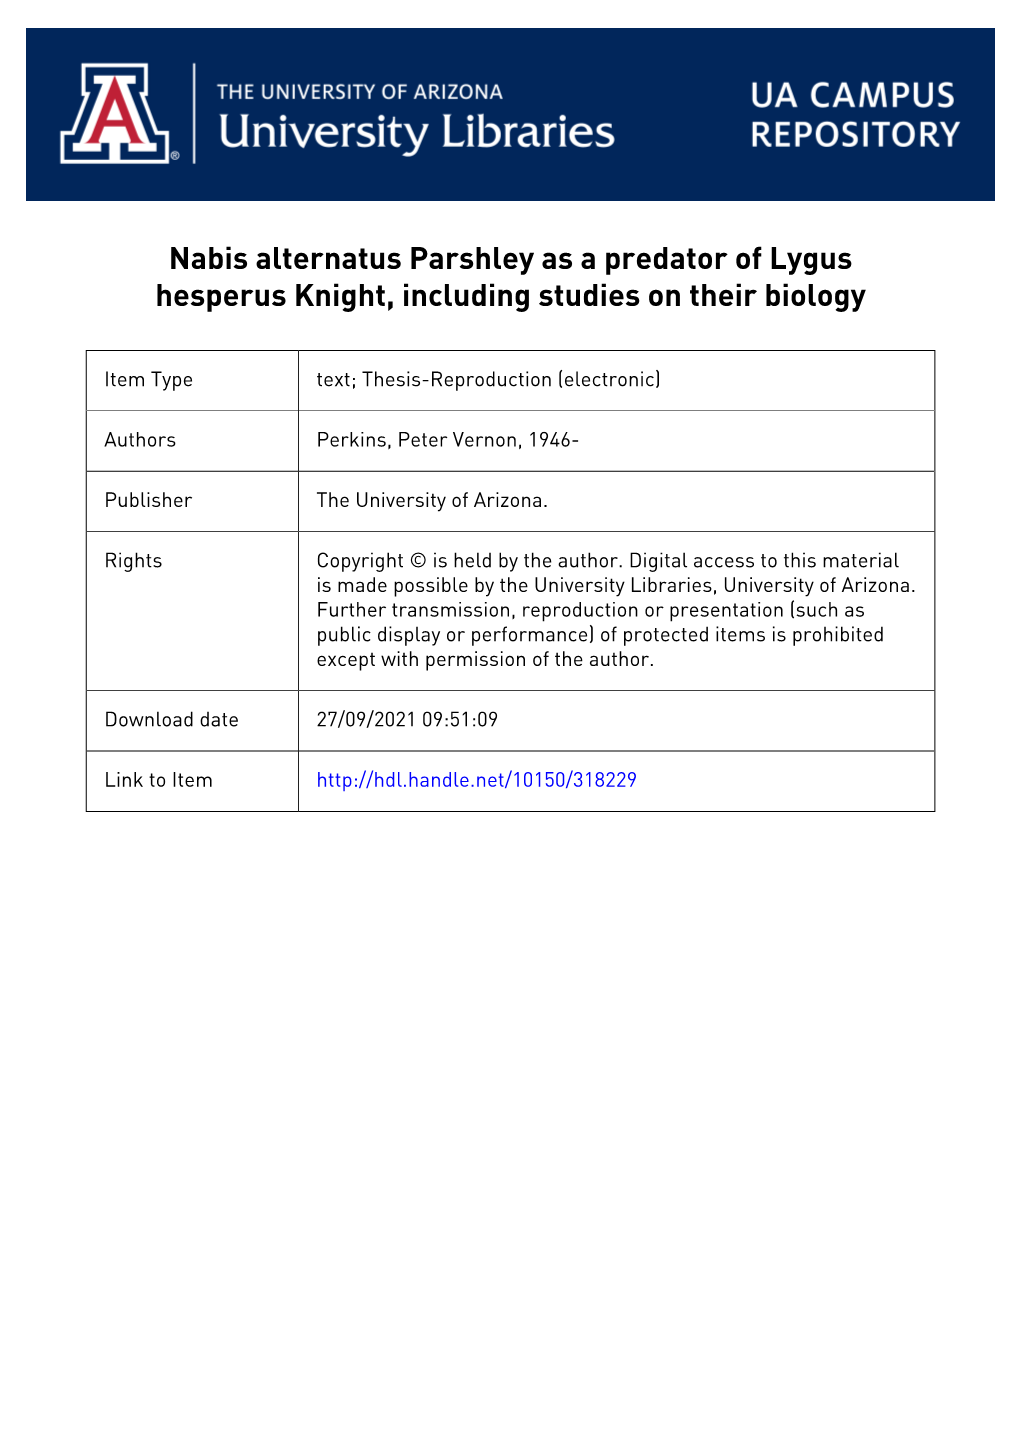 Nabis Alternatus Parshley As a Predator of Lygus Hesperus Knight, Including Studies on Their Biology